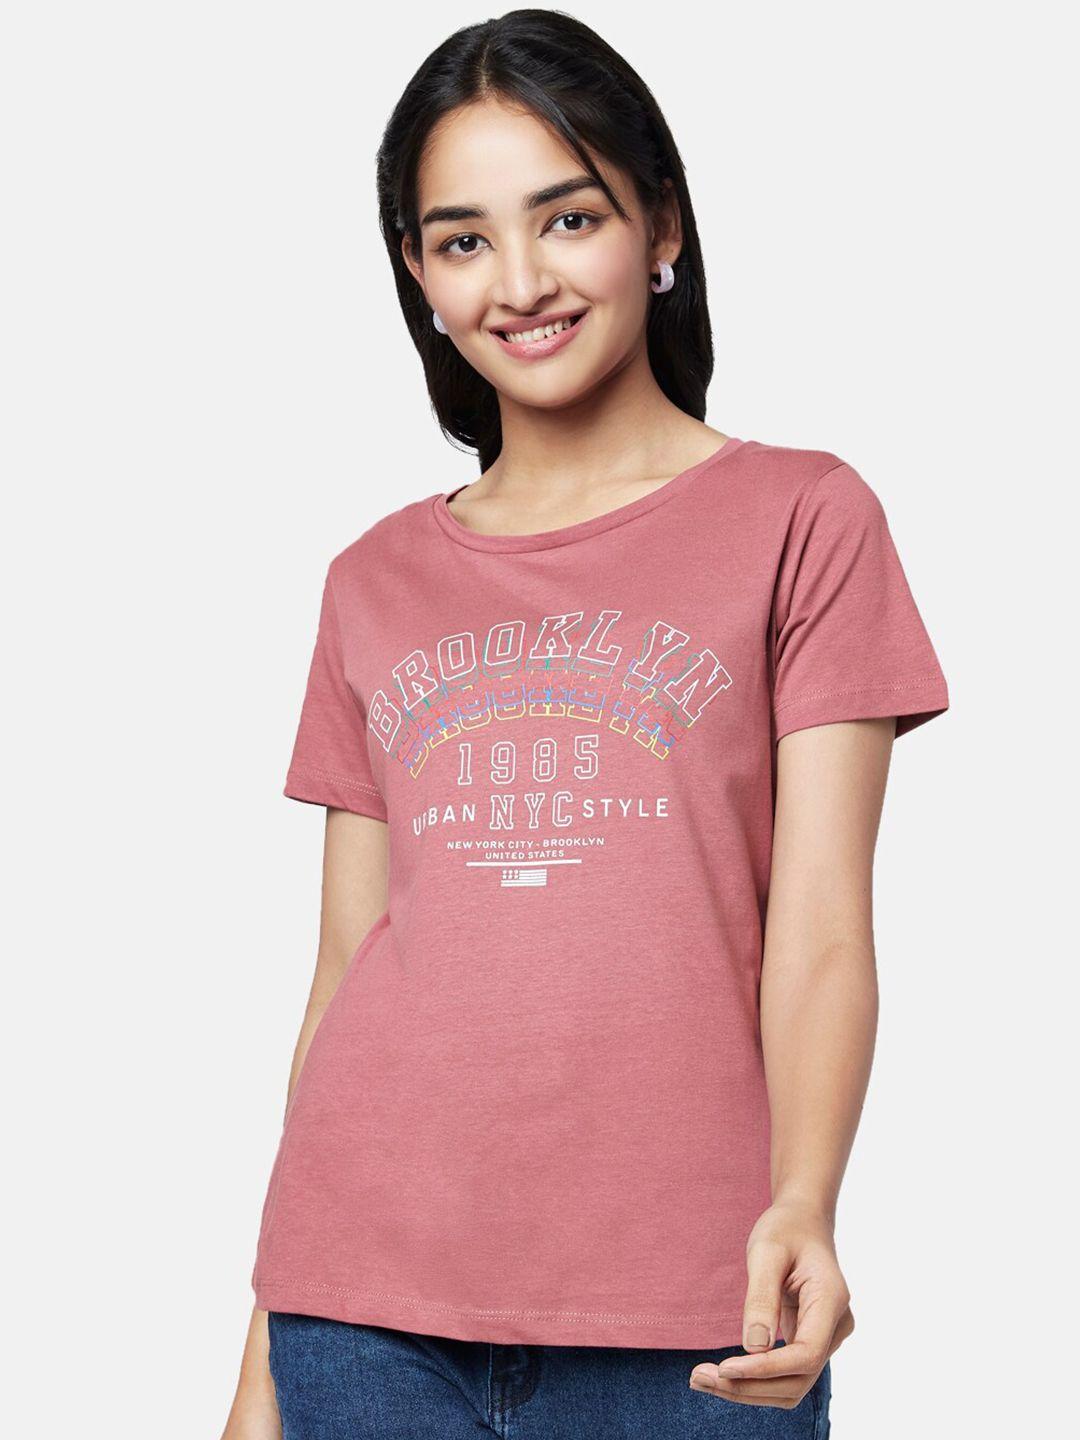 yu-by-pantaloons-women-typography-printed-cotton-t-shirt